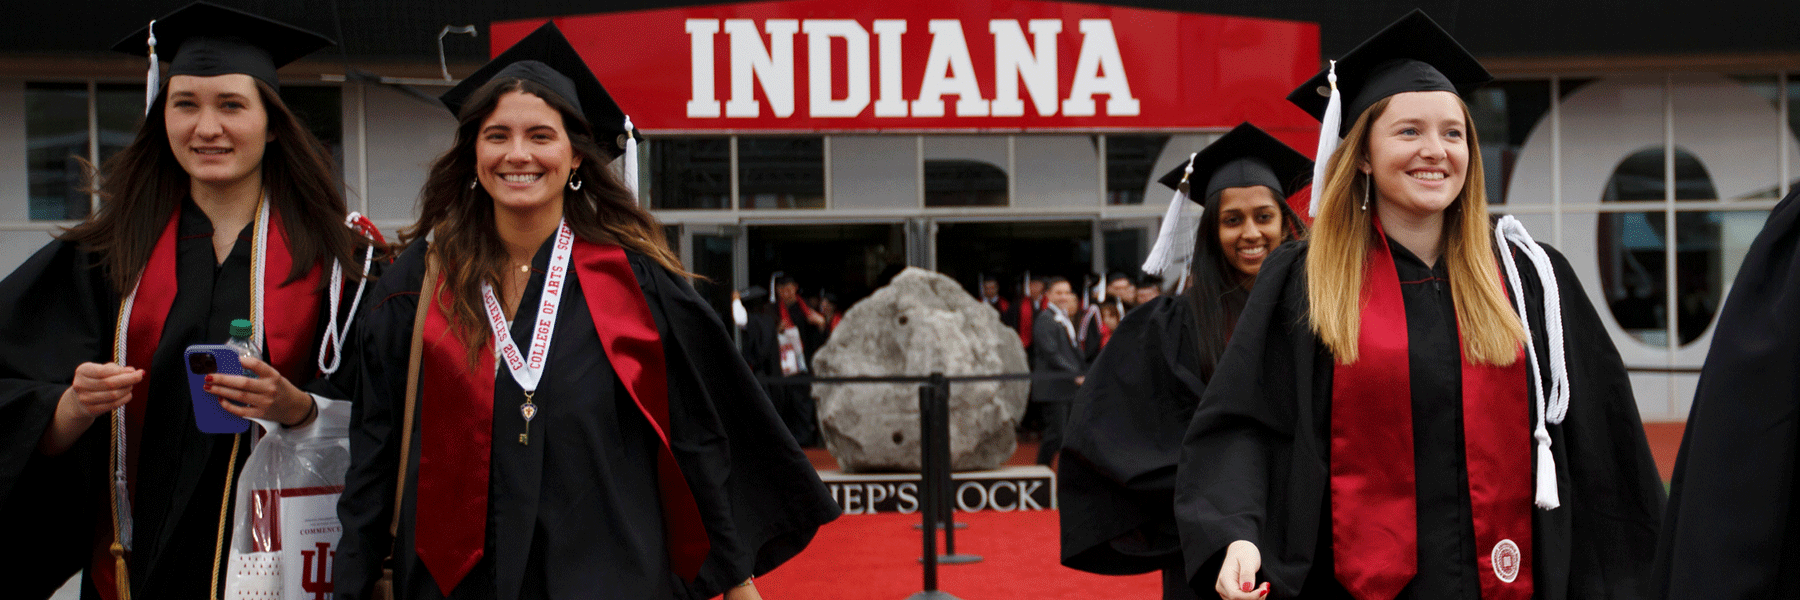 Graduates walk into Memorial Stadium with Hep's Rock in the background.